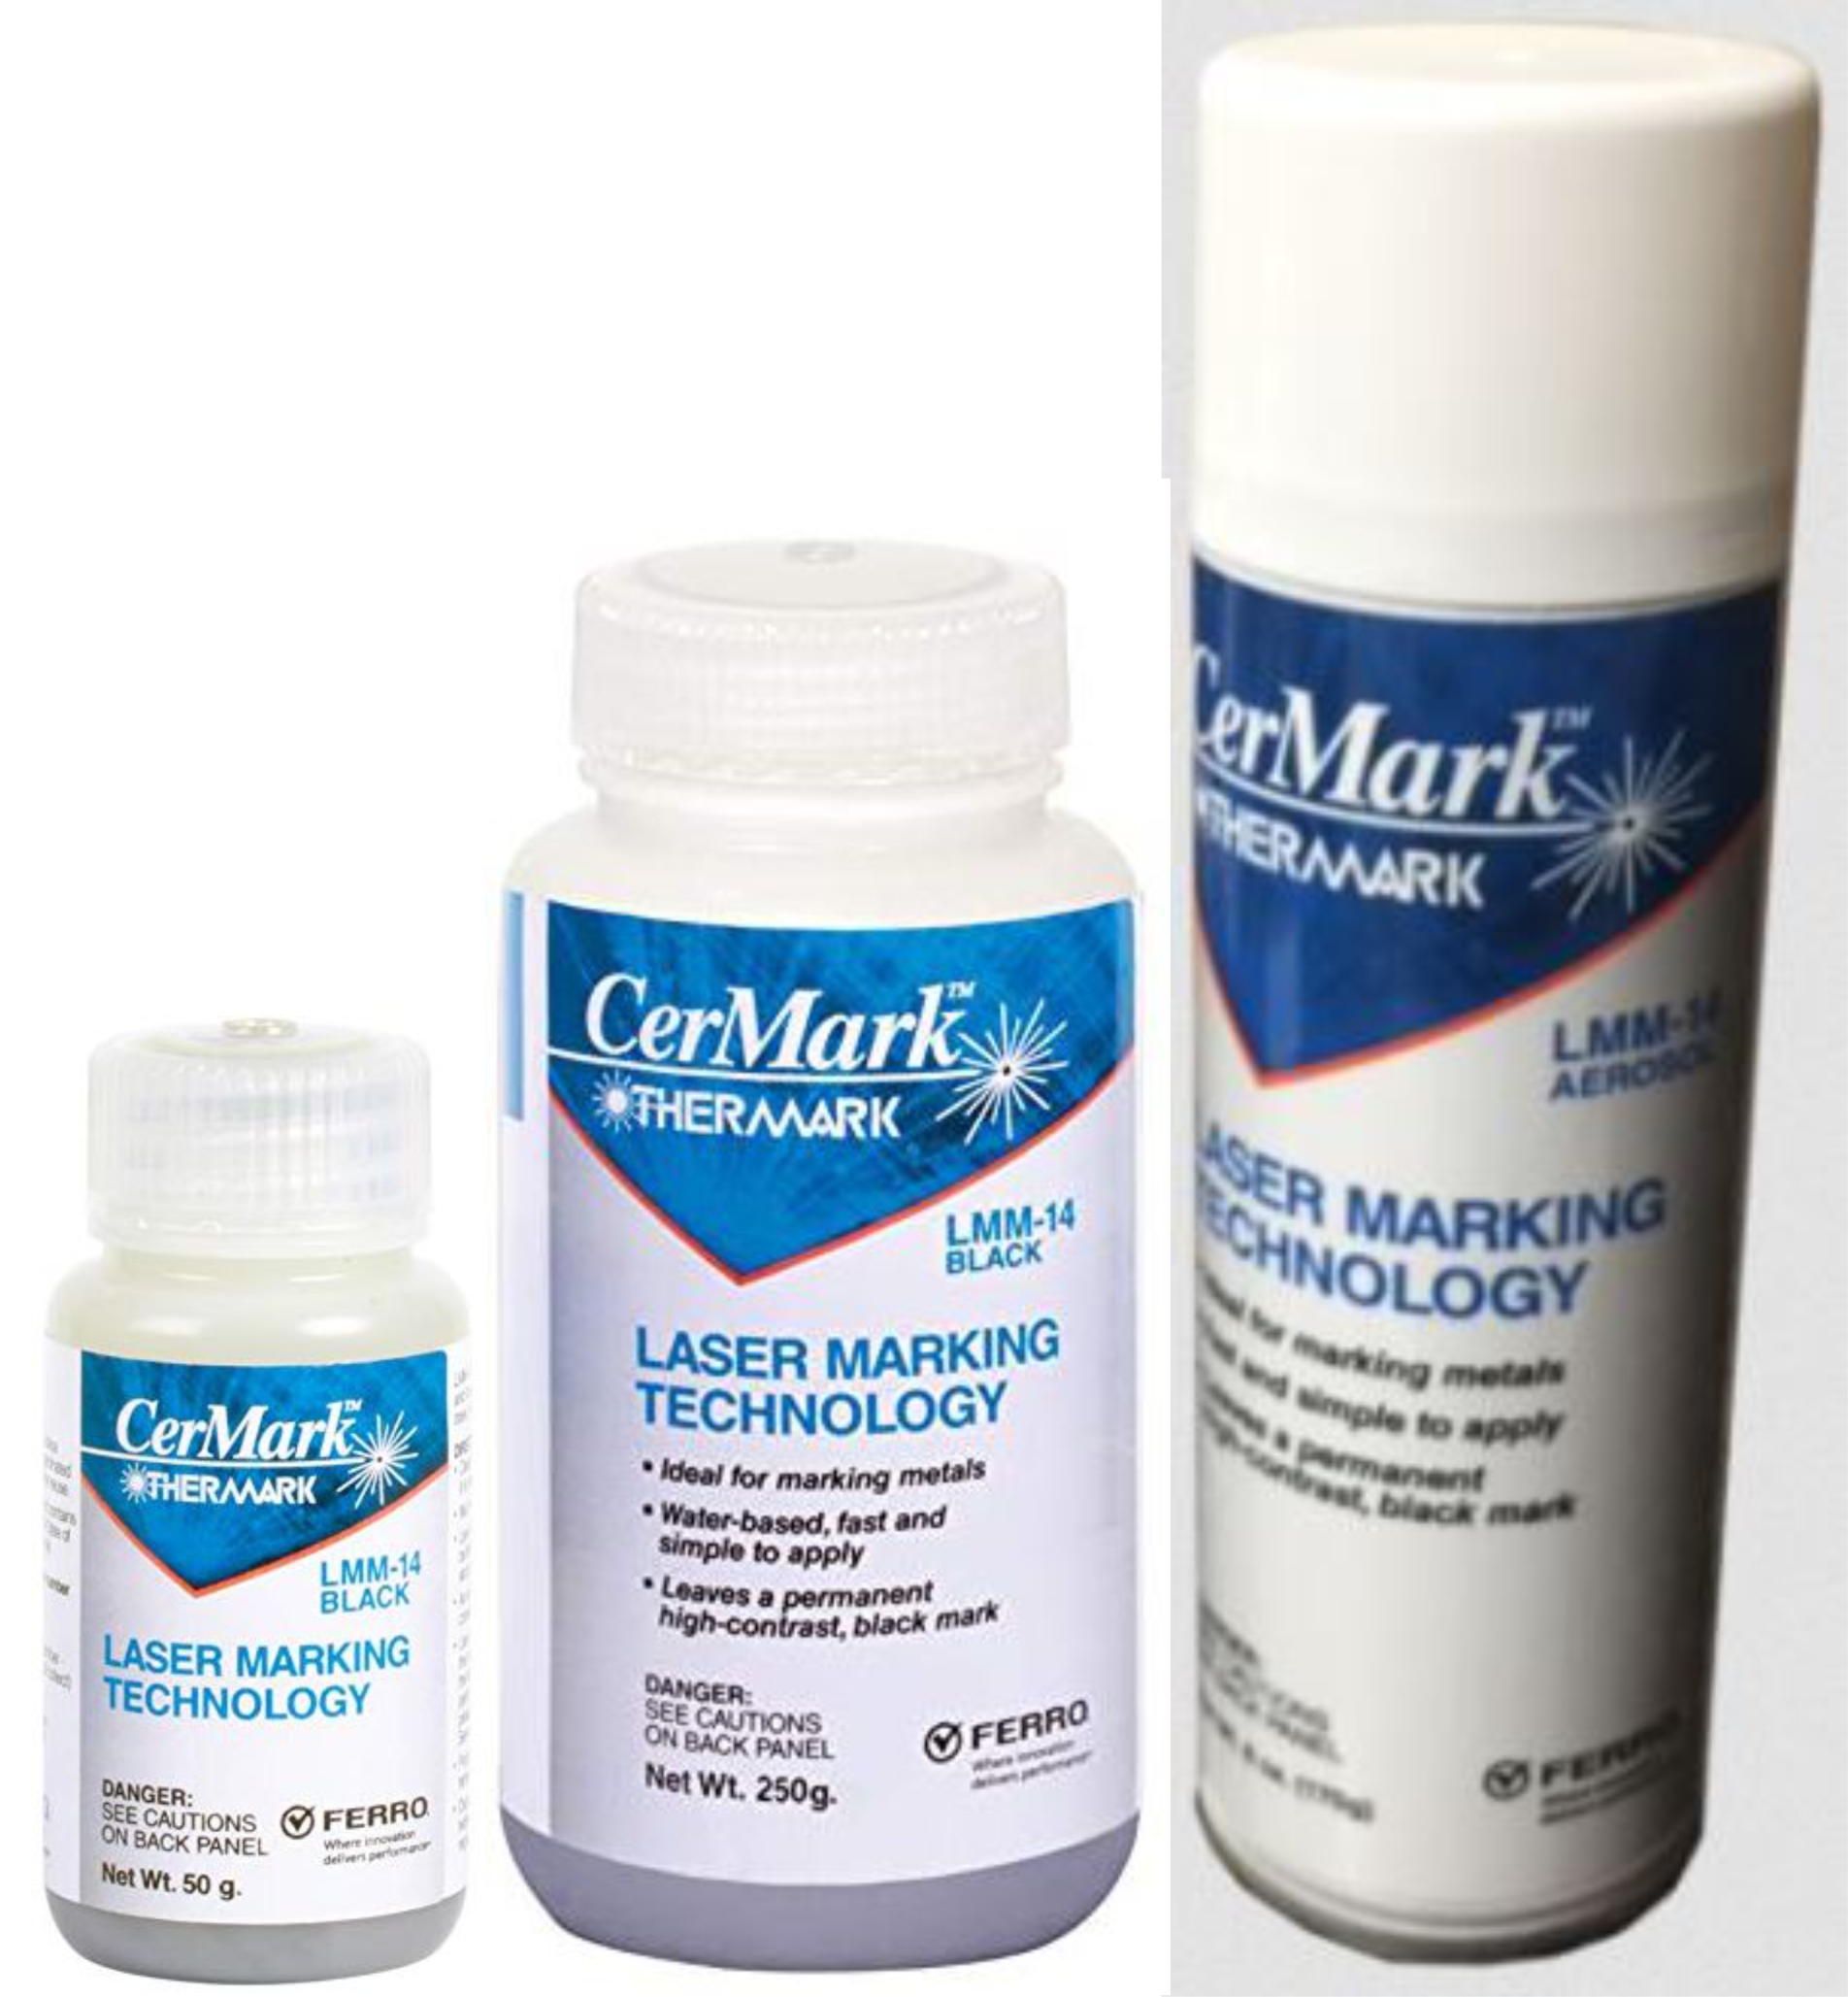 CerMark Thermark LMM 14 Aerosal and Paste